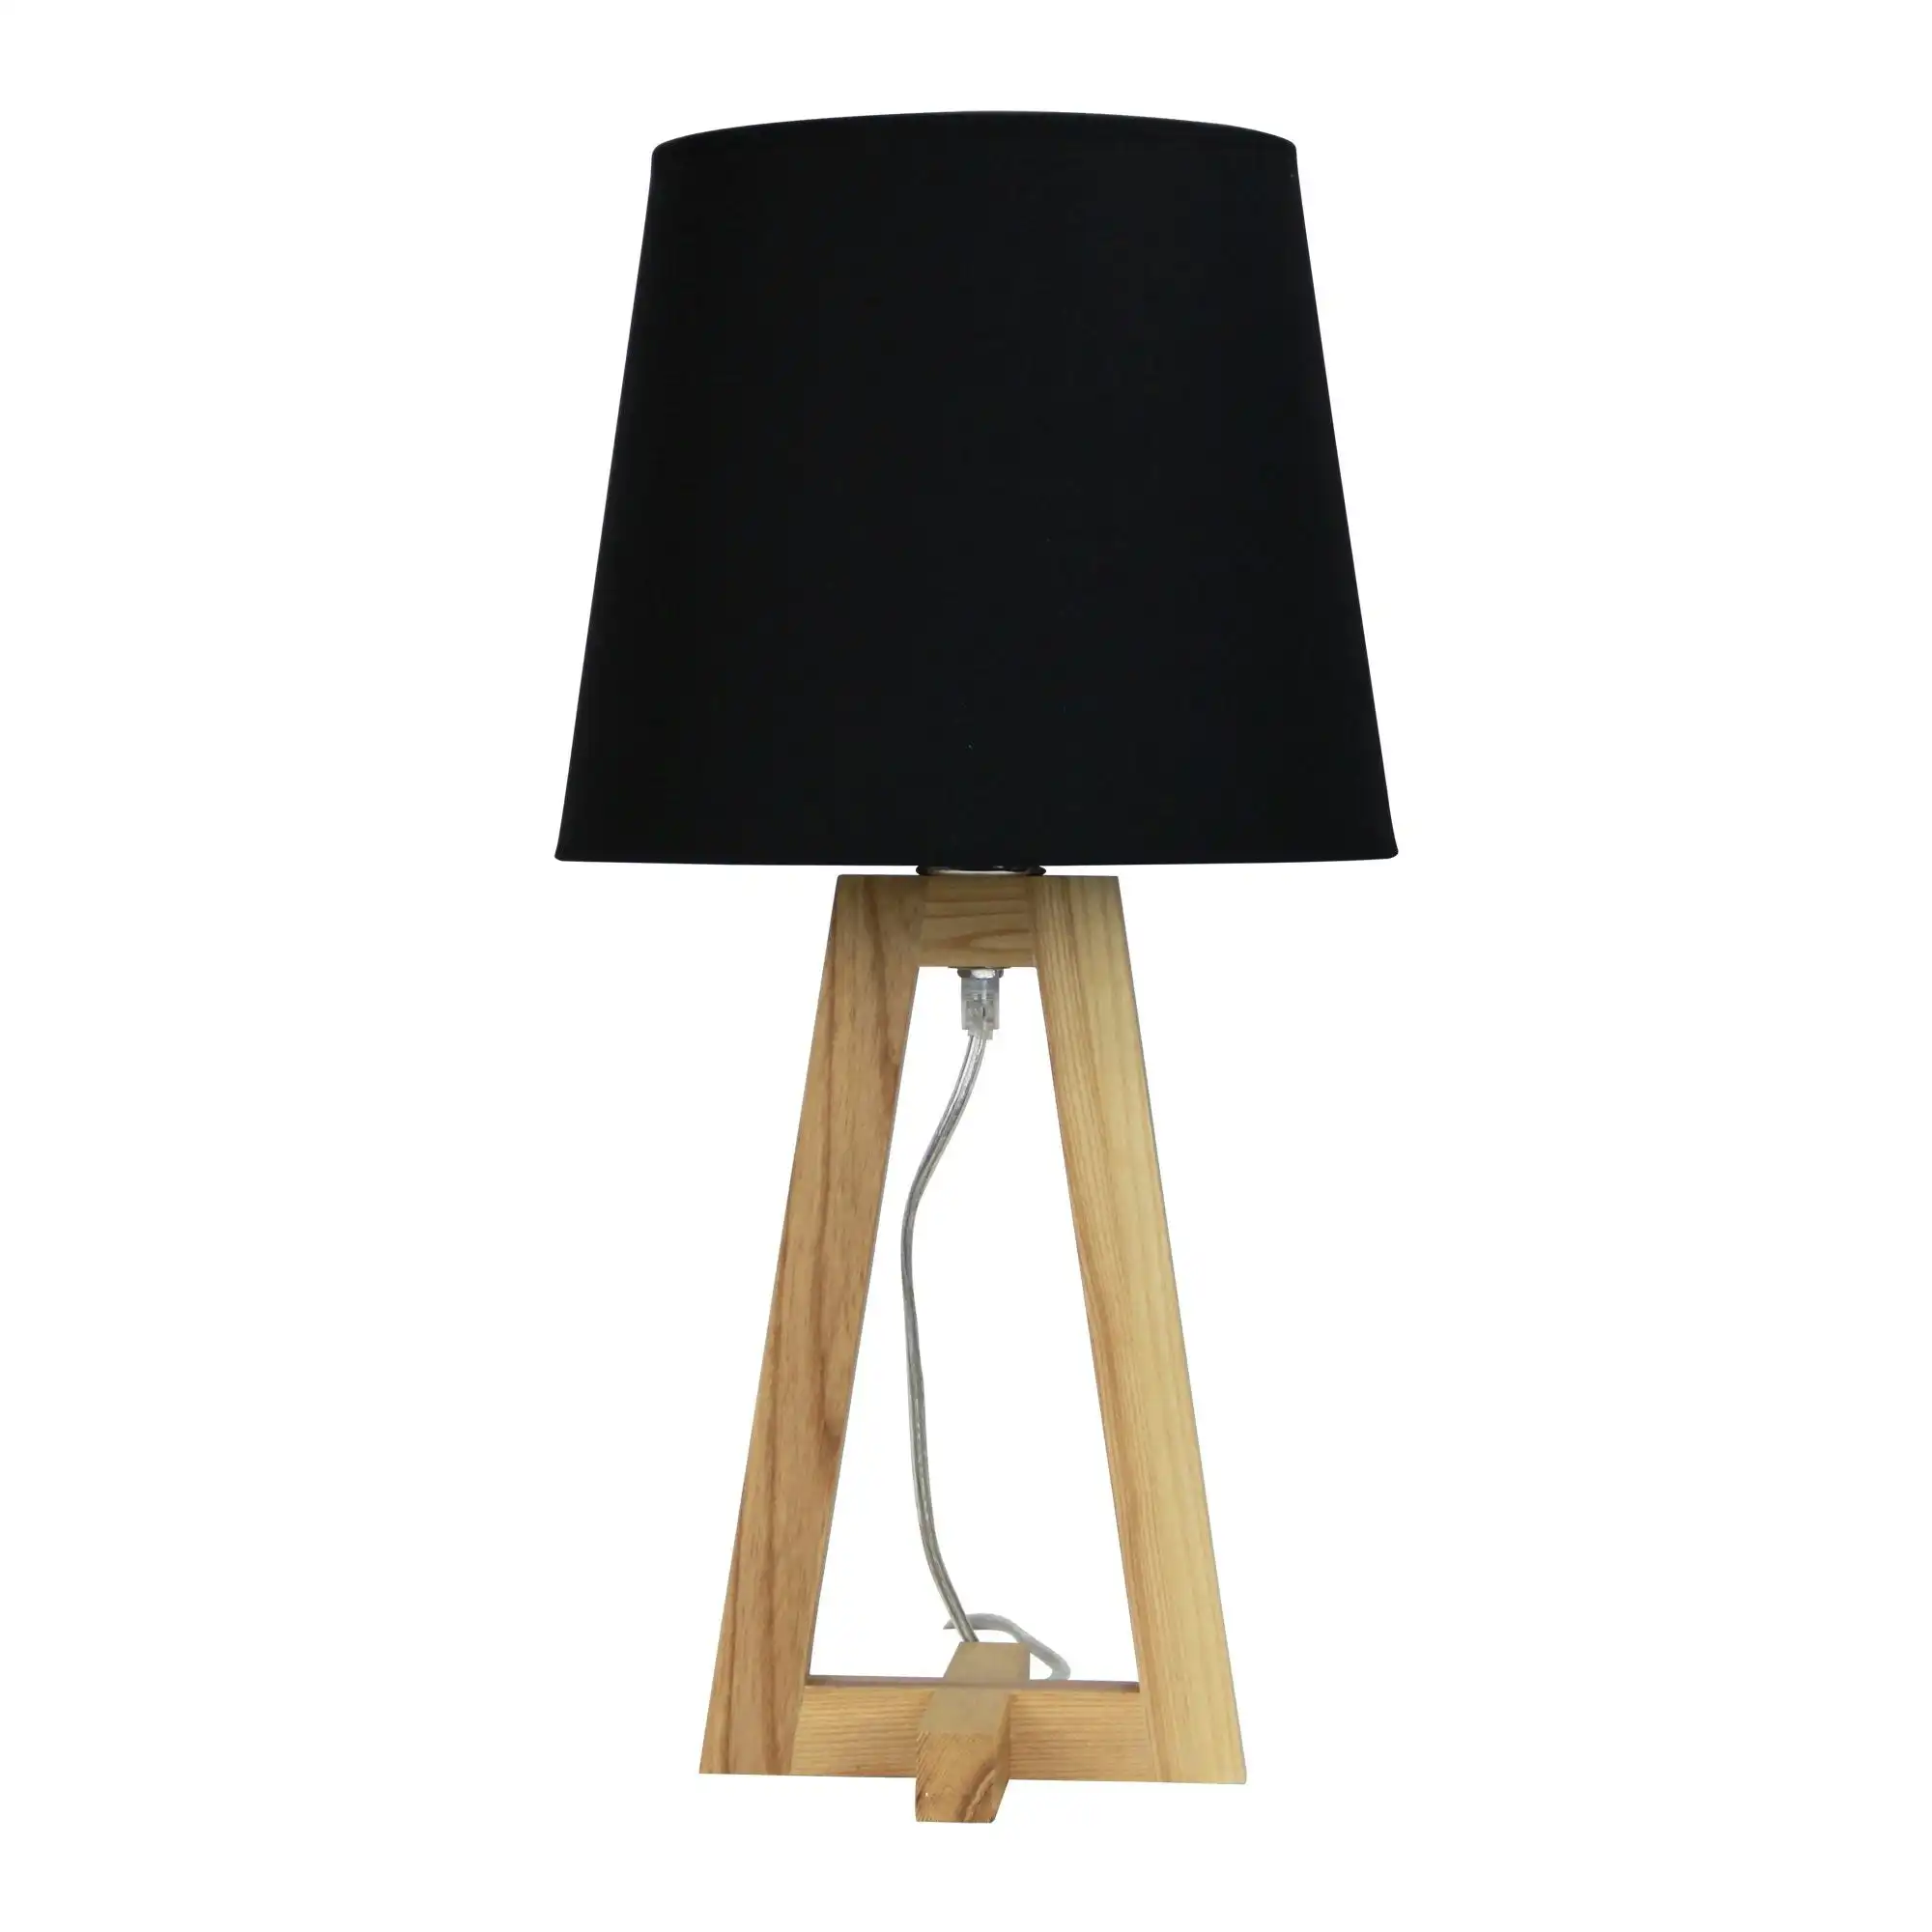 EDRA TABLE LAMP Black Scandi Table Lamp with Black Cotton Shade